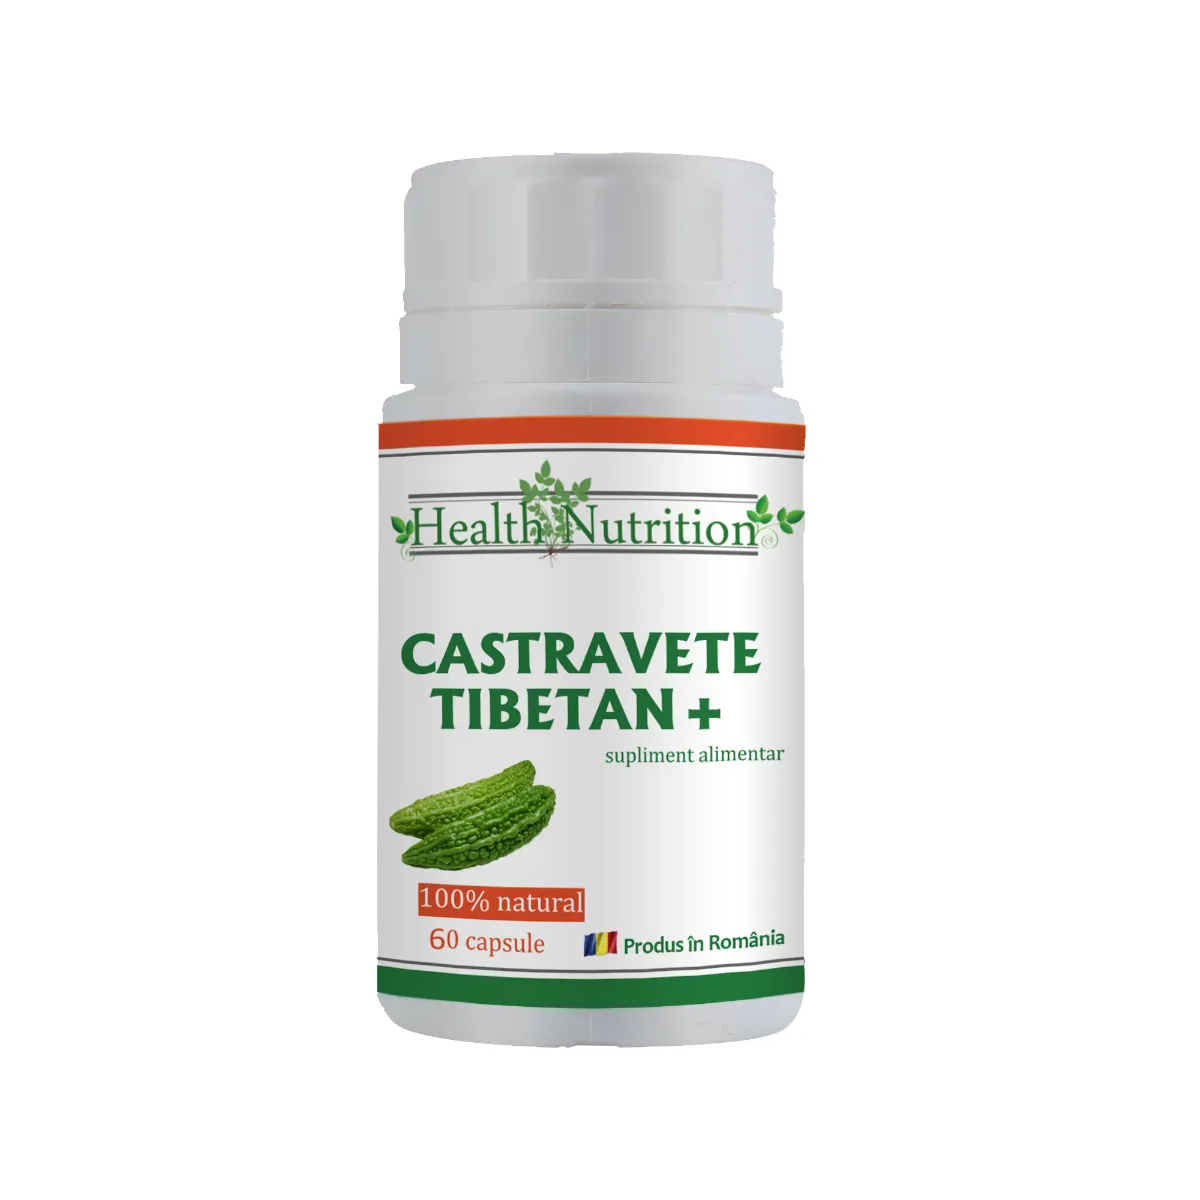 Castravete tibetan, 60 caspule, Health Nutrition